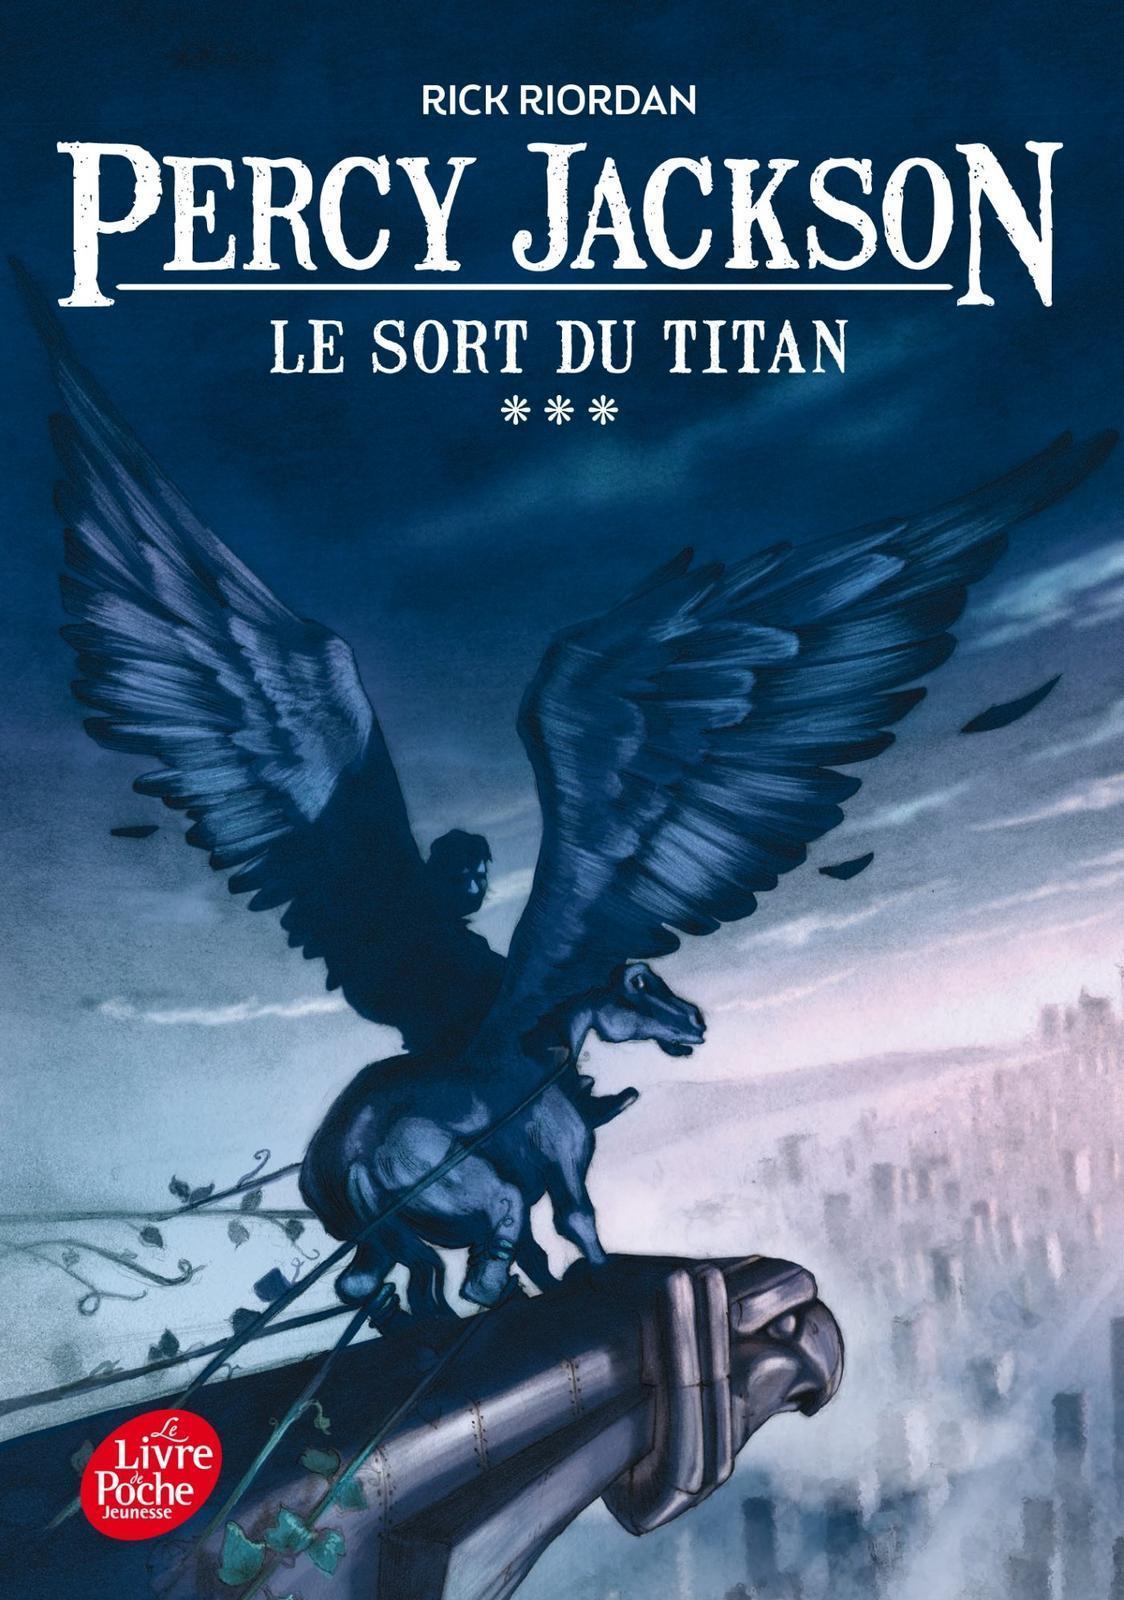 Rick Riordan: Percy Jackson - Le sort du titan (French language, 2010)